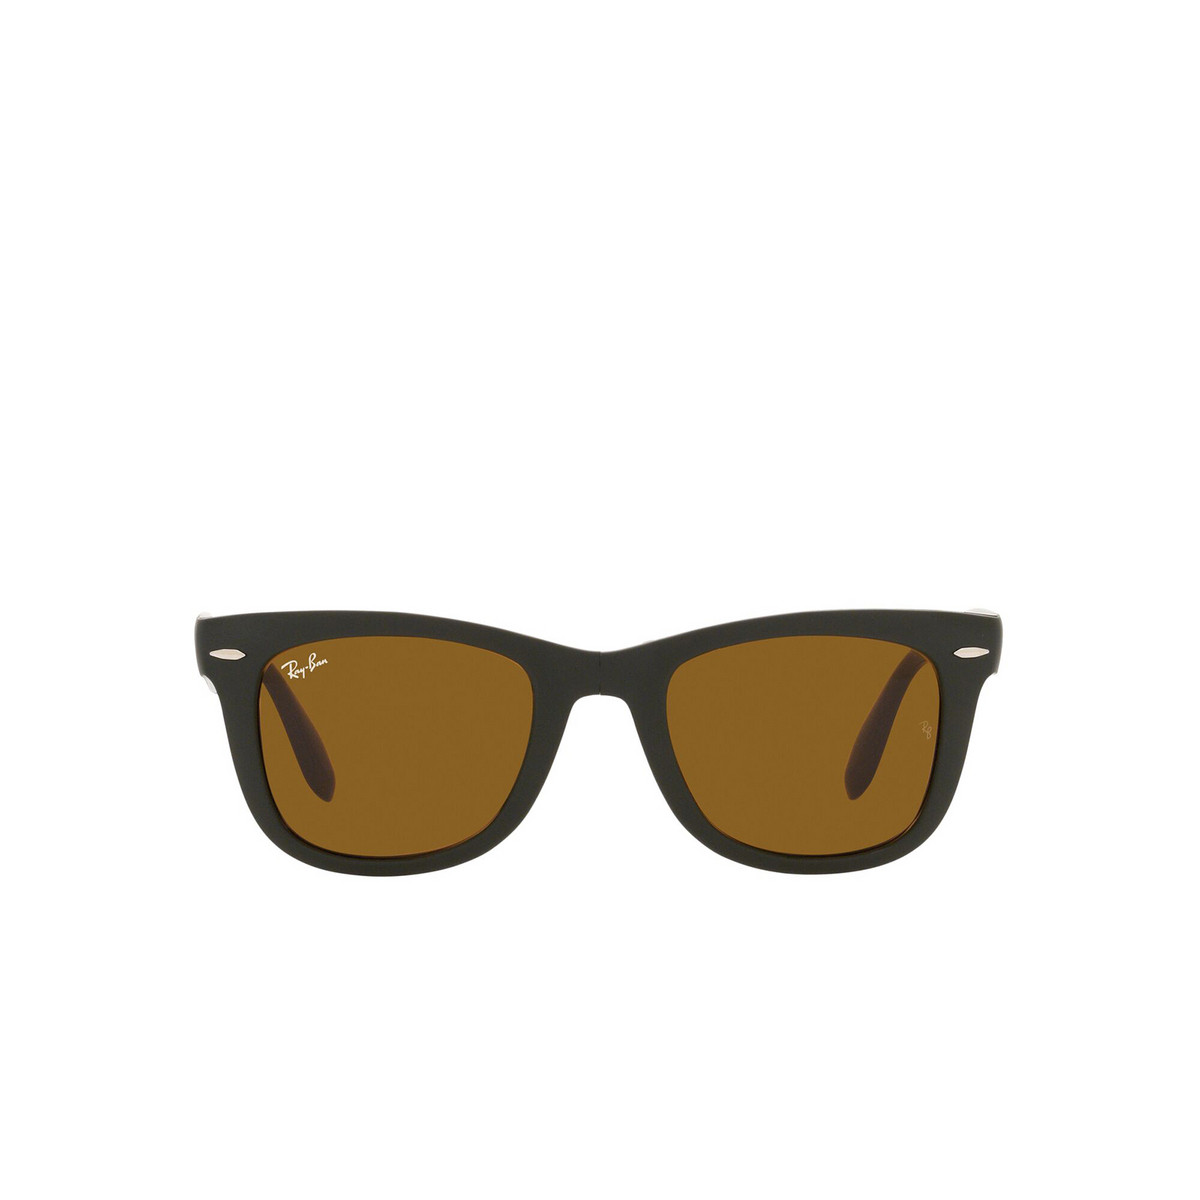 Ray-Ban FOLDING WAYFARER Sunglasses 657533 Military Green - front view